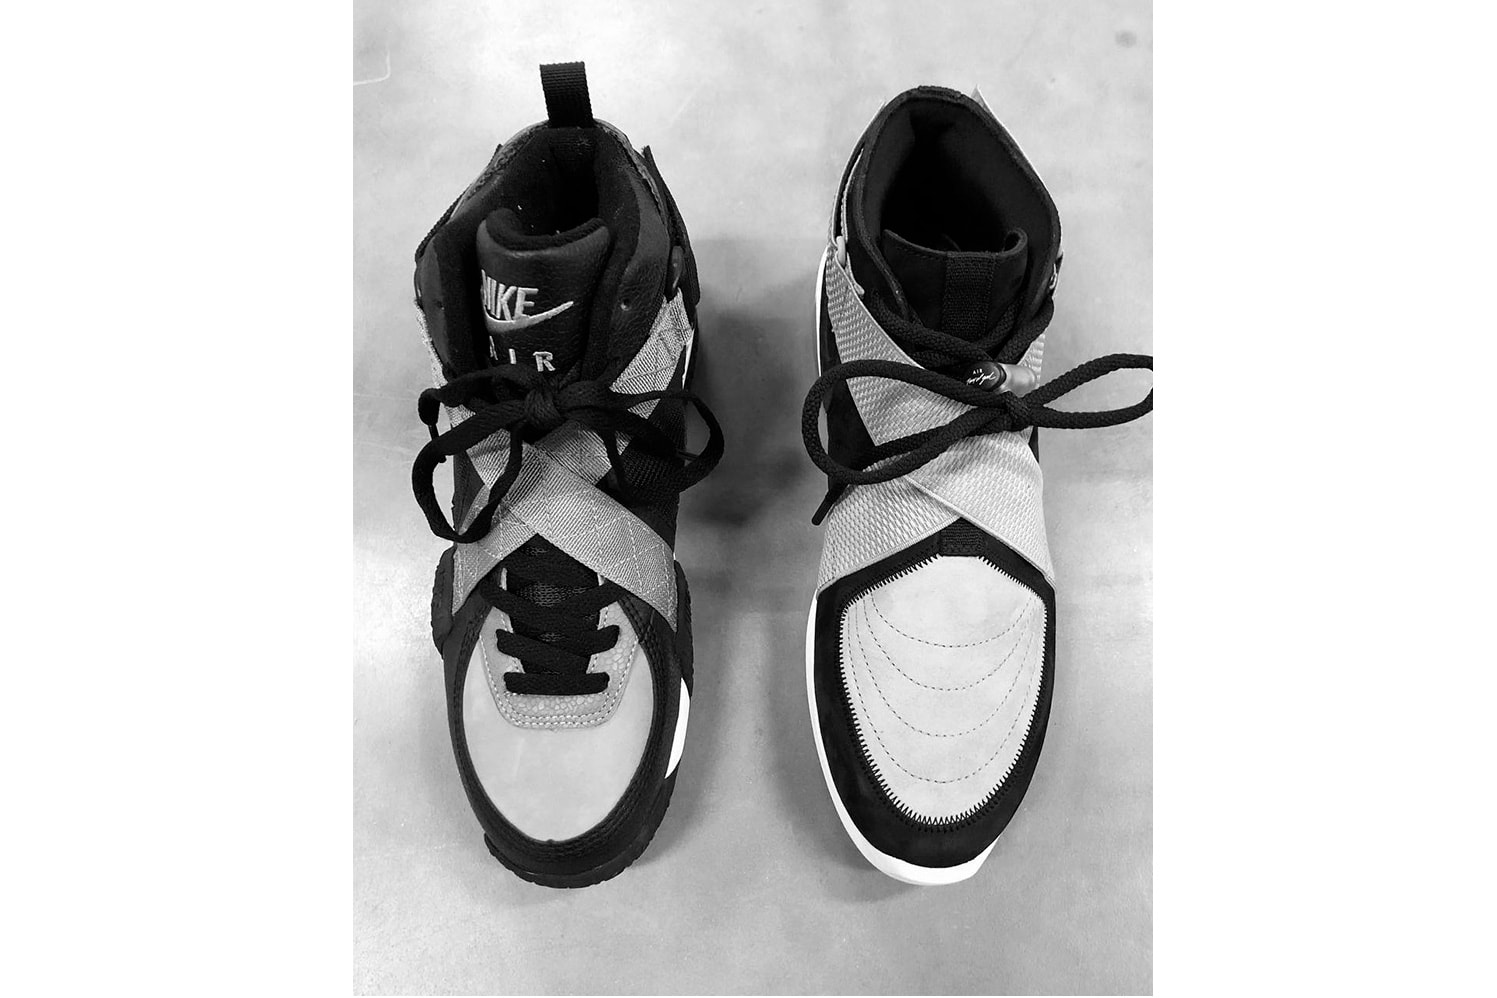 Kanye West's Nike Air 180 Sample